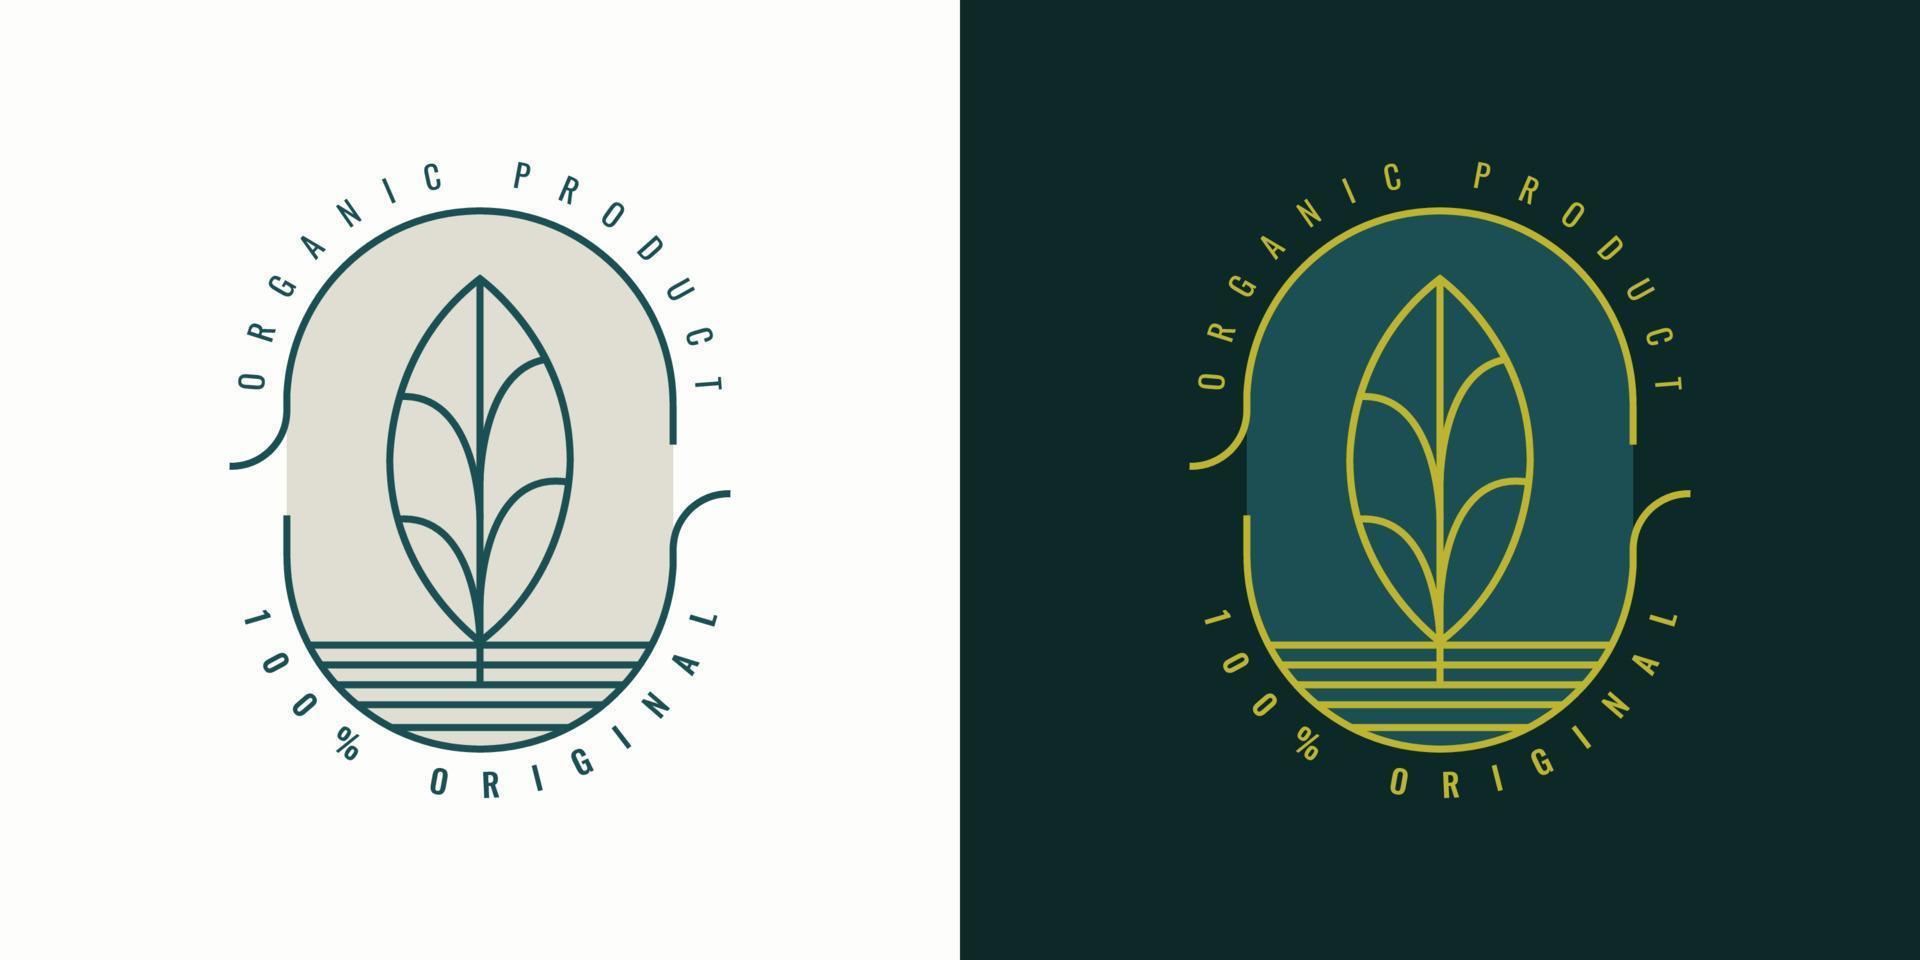 Original Organic product logo design vector